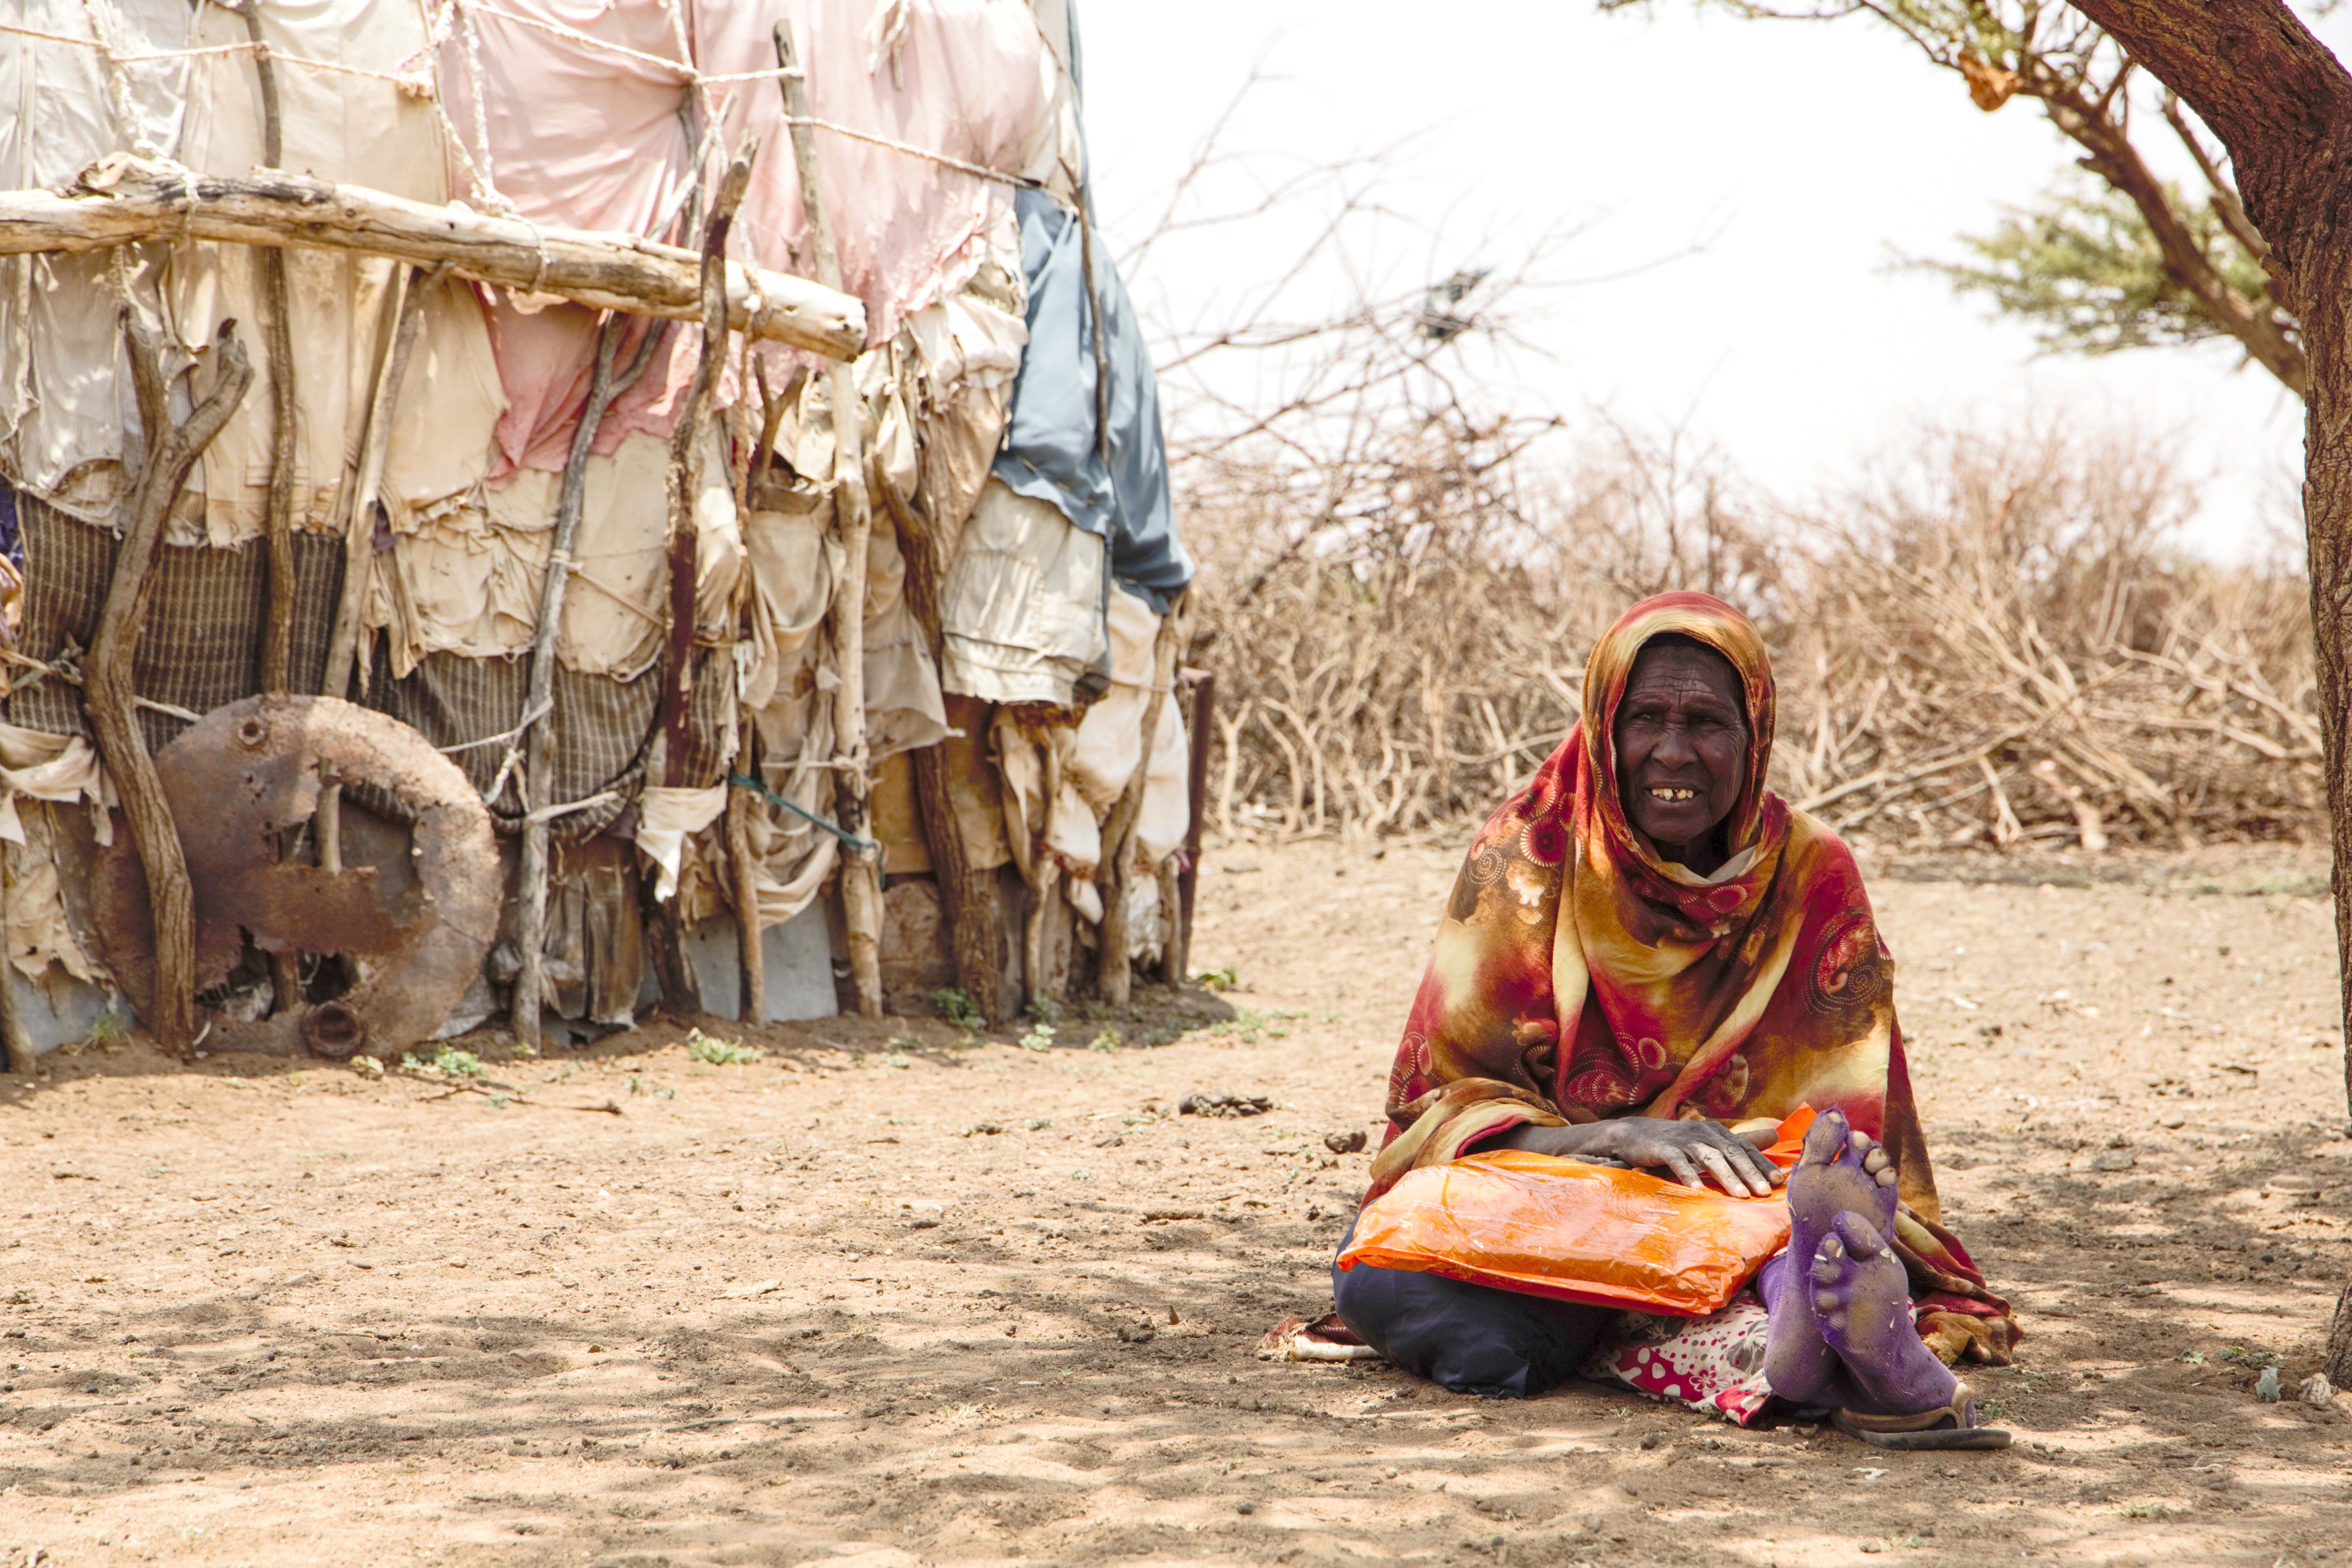 80-year-old Farmer in Somaliland